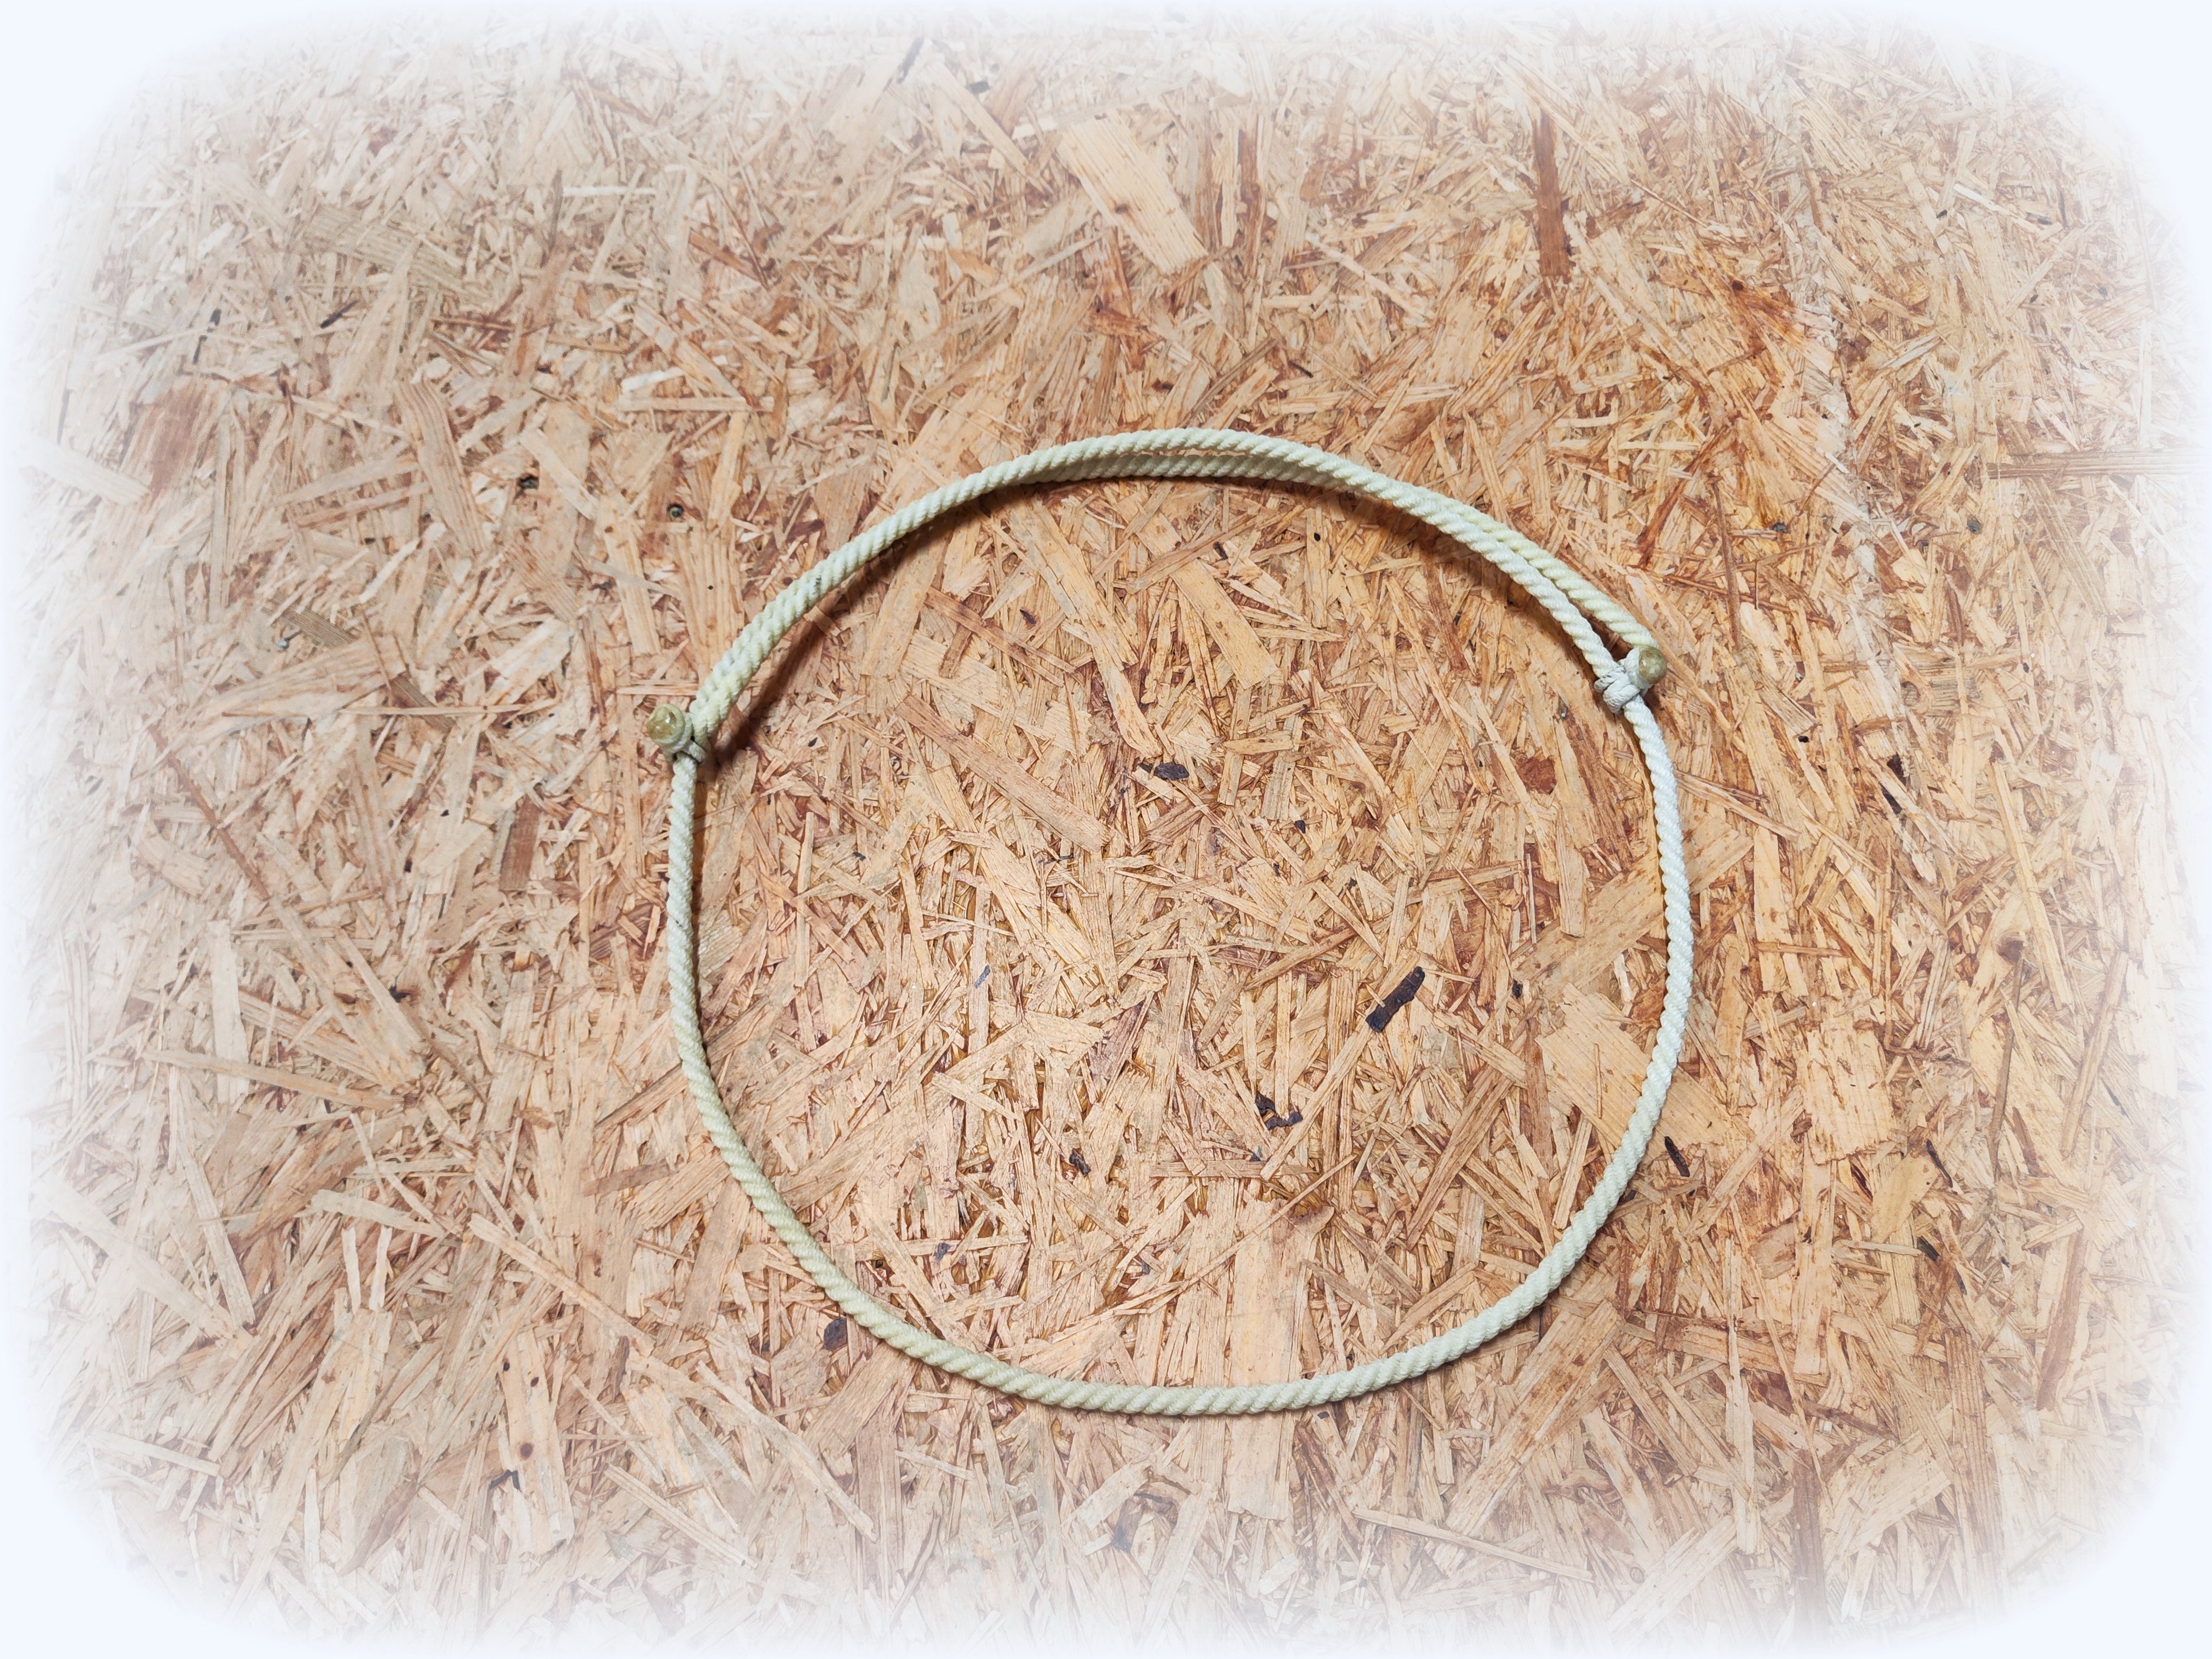 Neck ring for horses adjustable "medium rigid" made of nylon